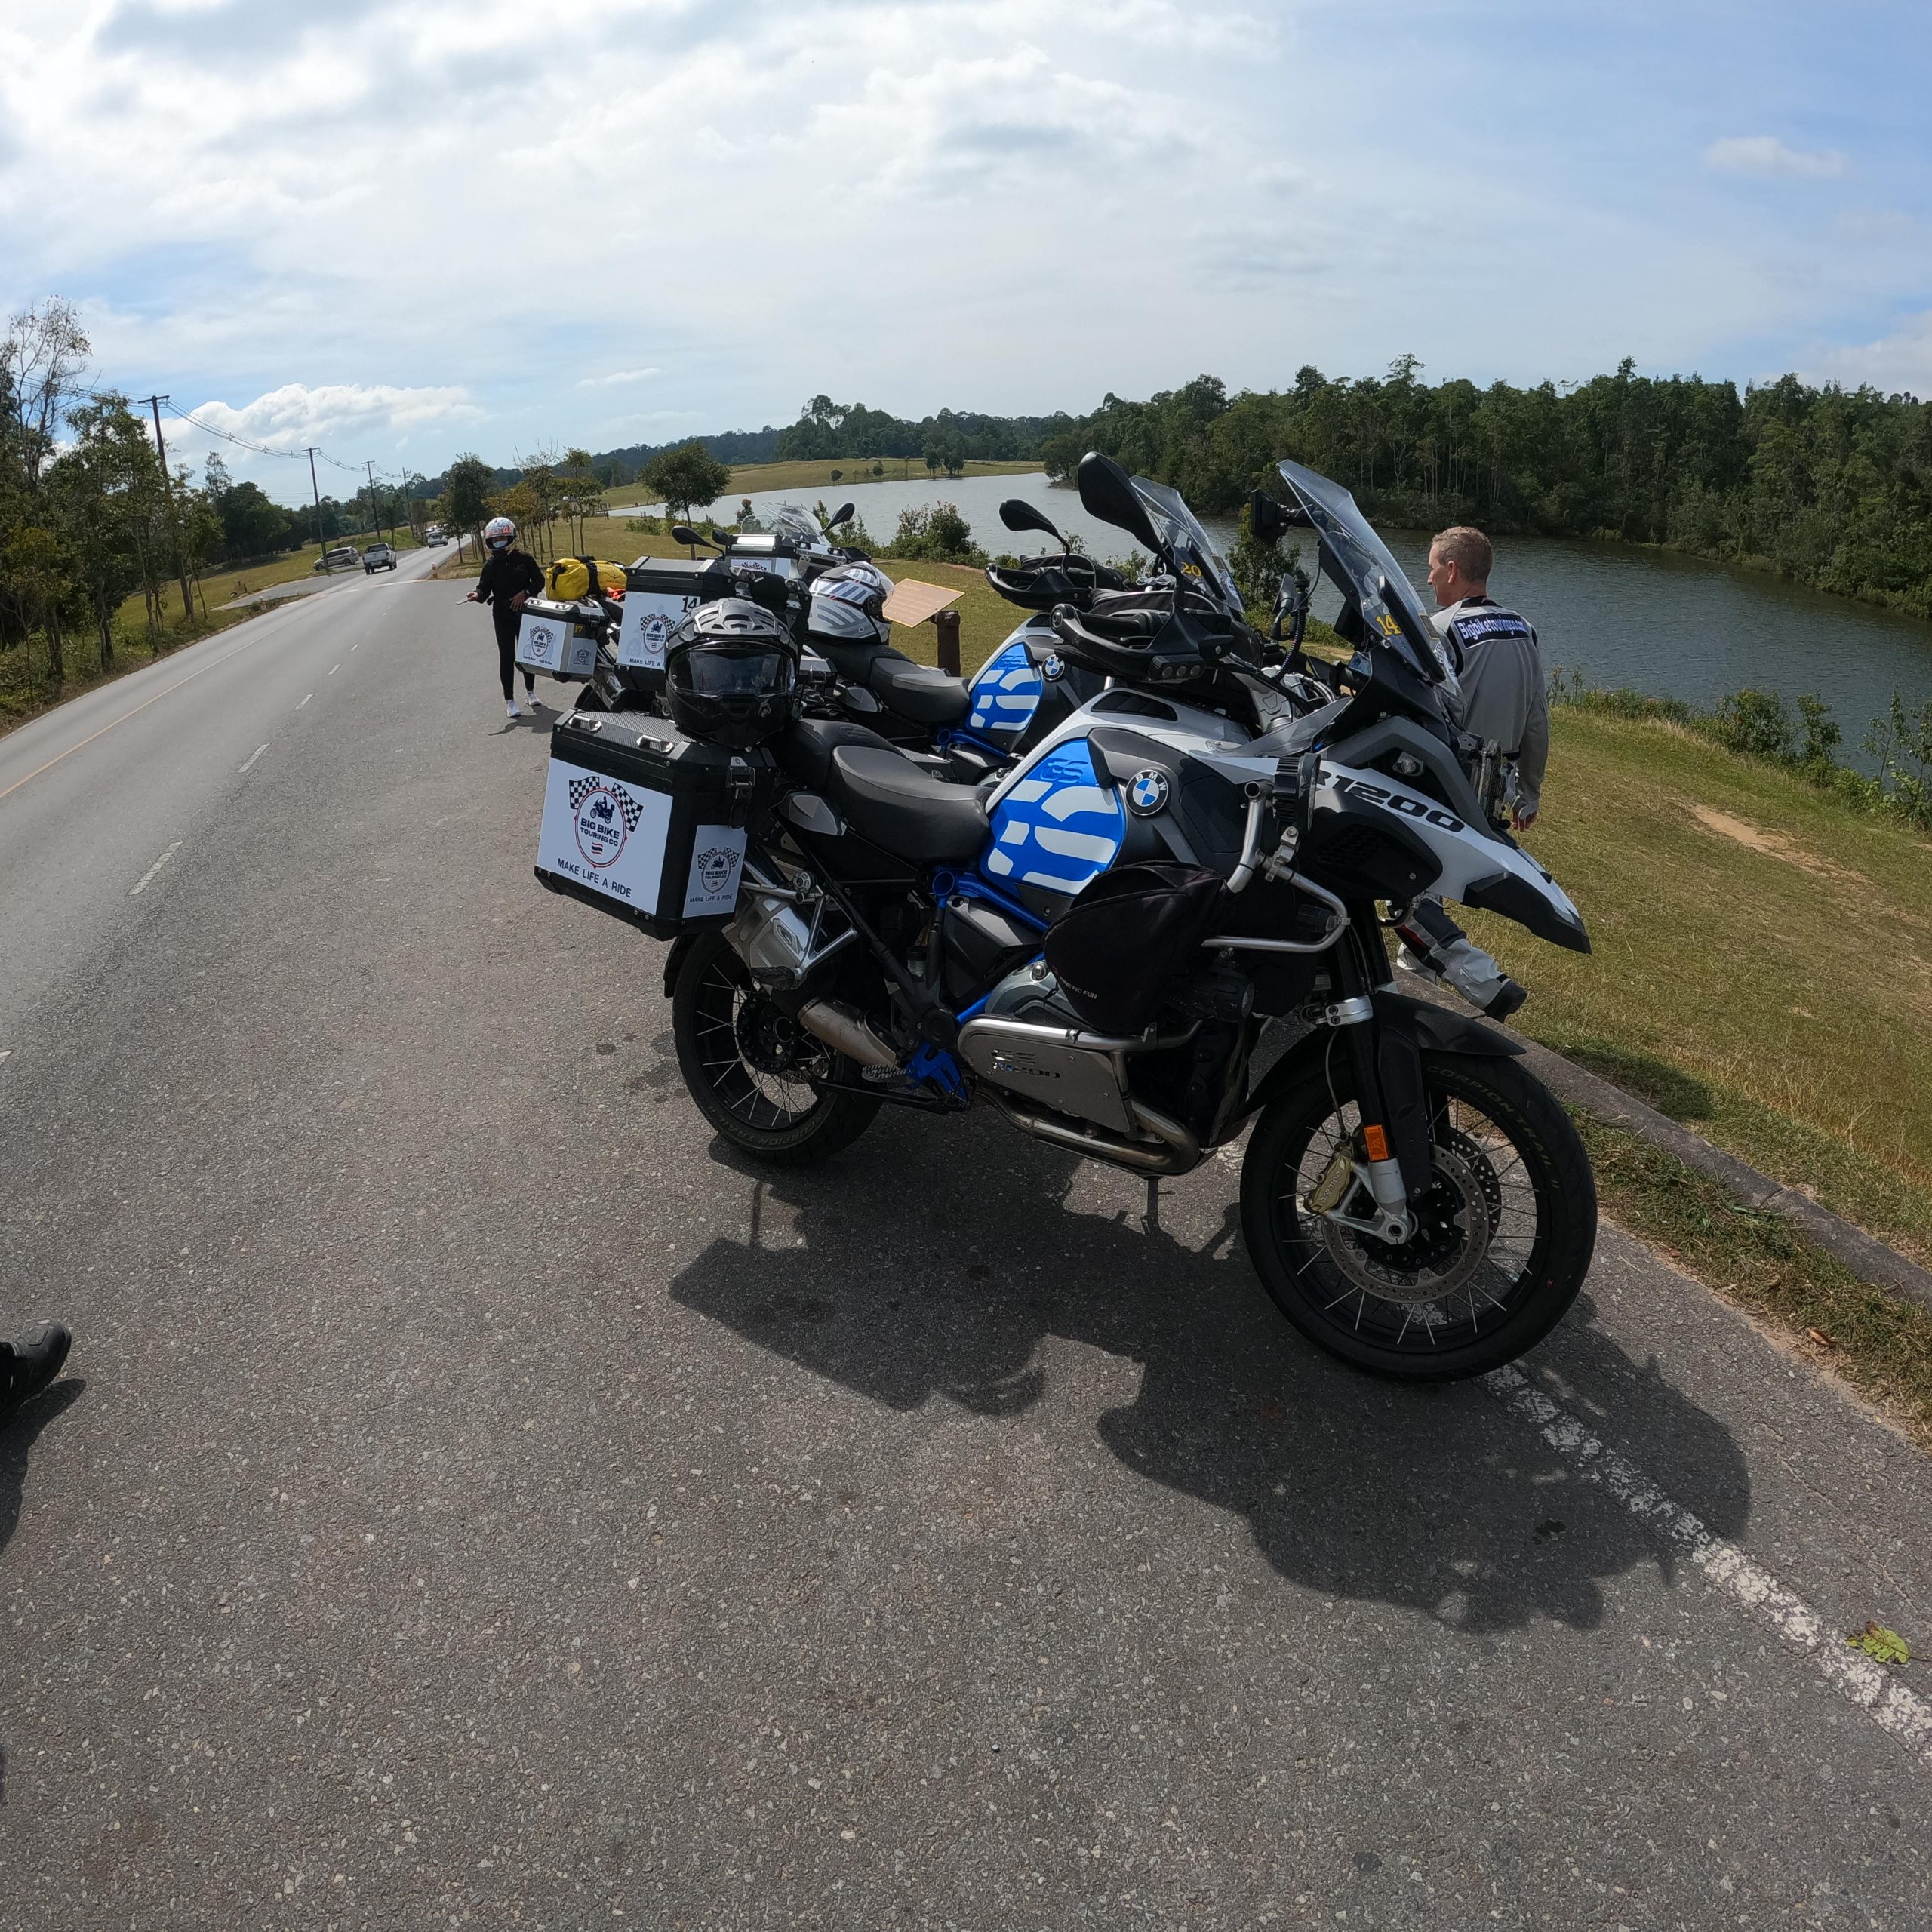 Thailand Motorcycle tour